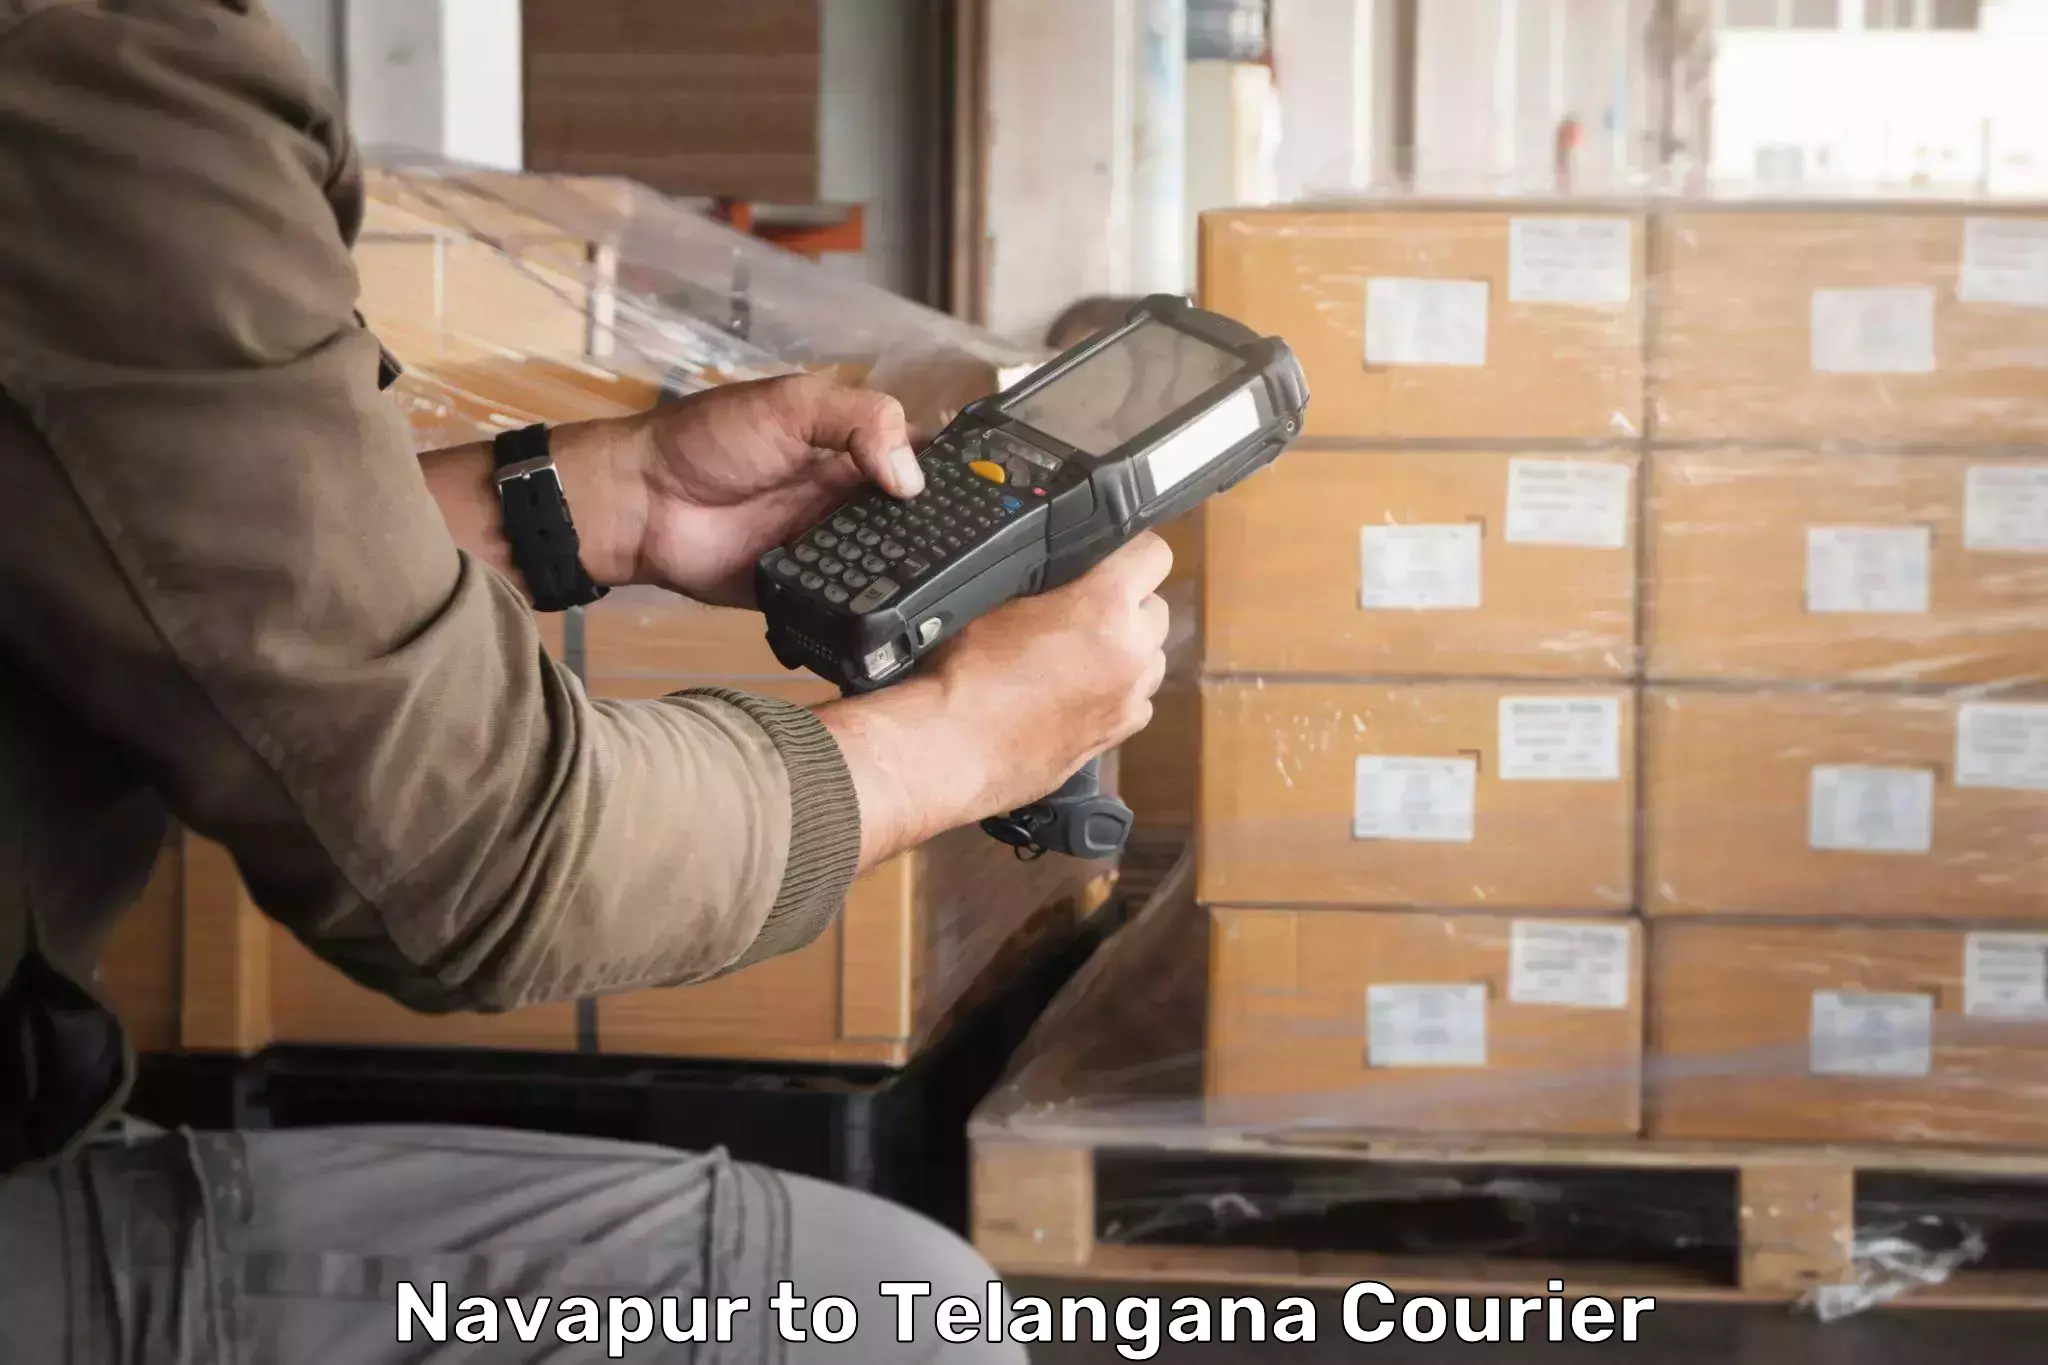 Flexible delivery schedules in Navapur to Kacheguda